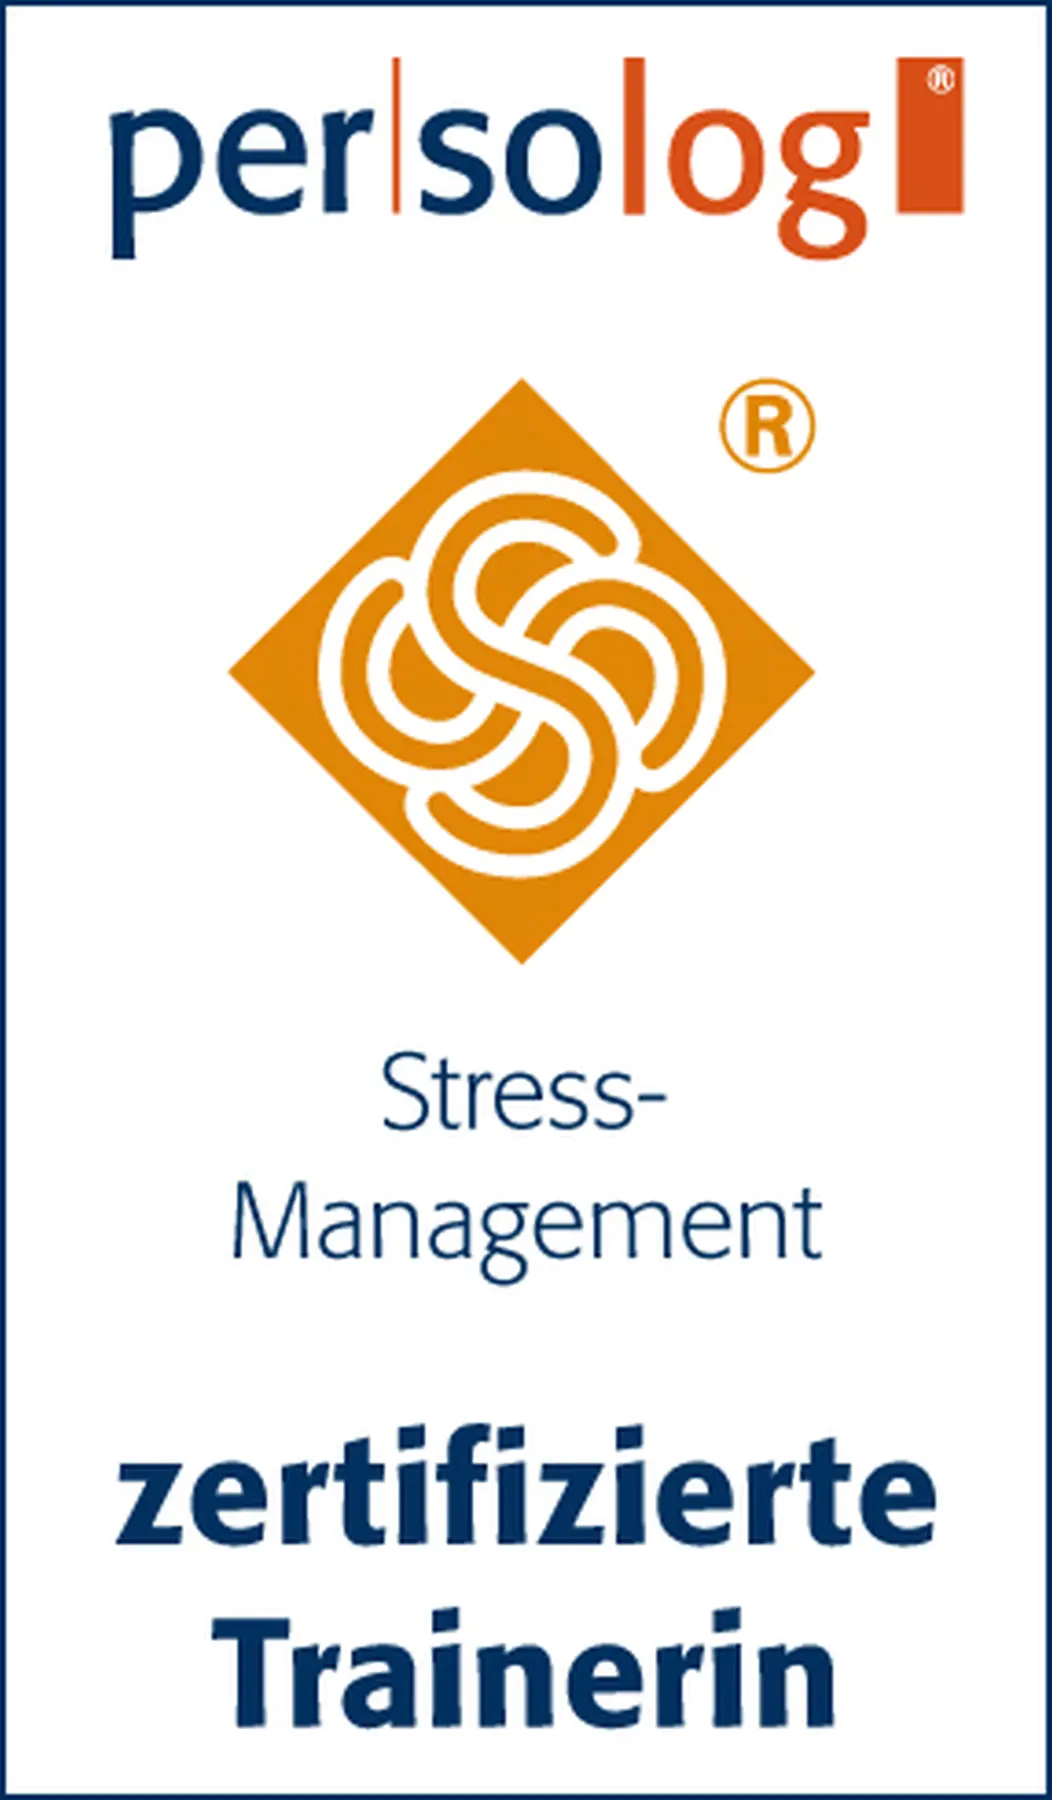 perisolog Stress Management zertifizierte Trainerin